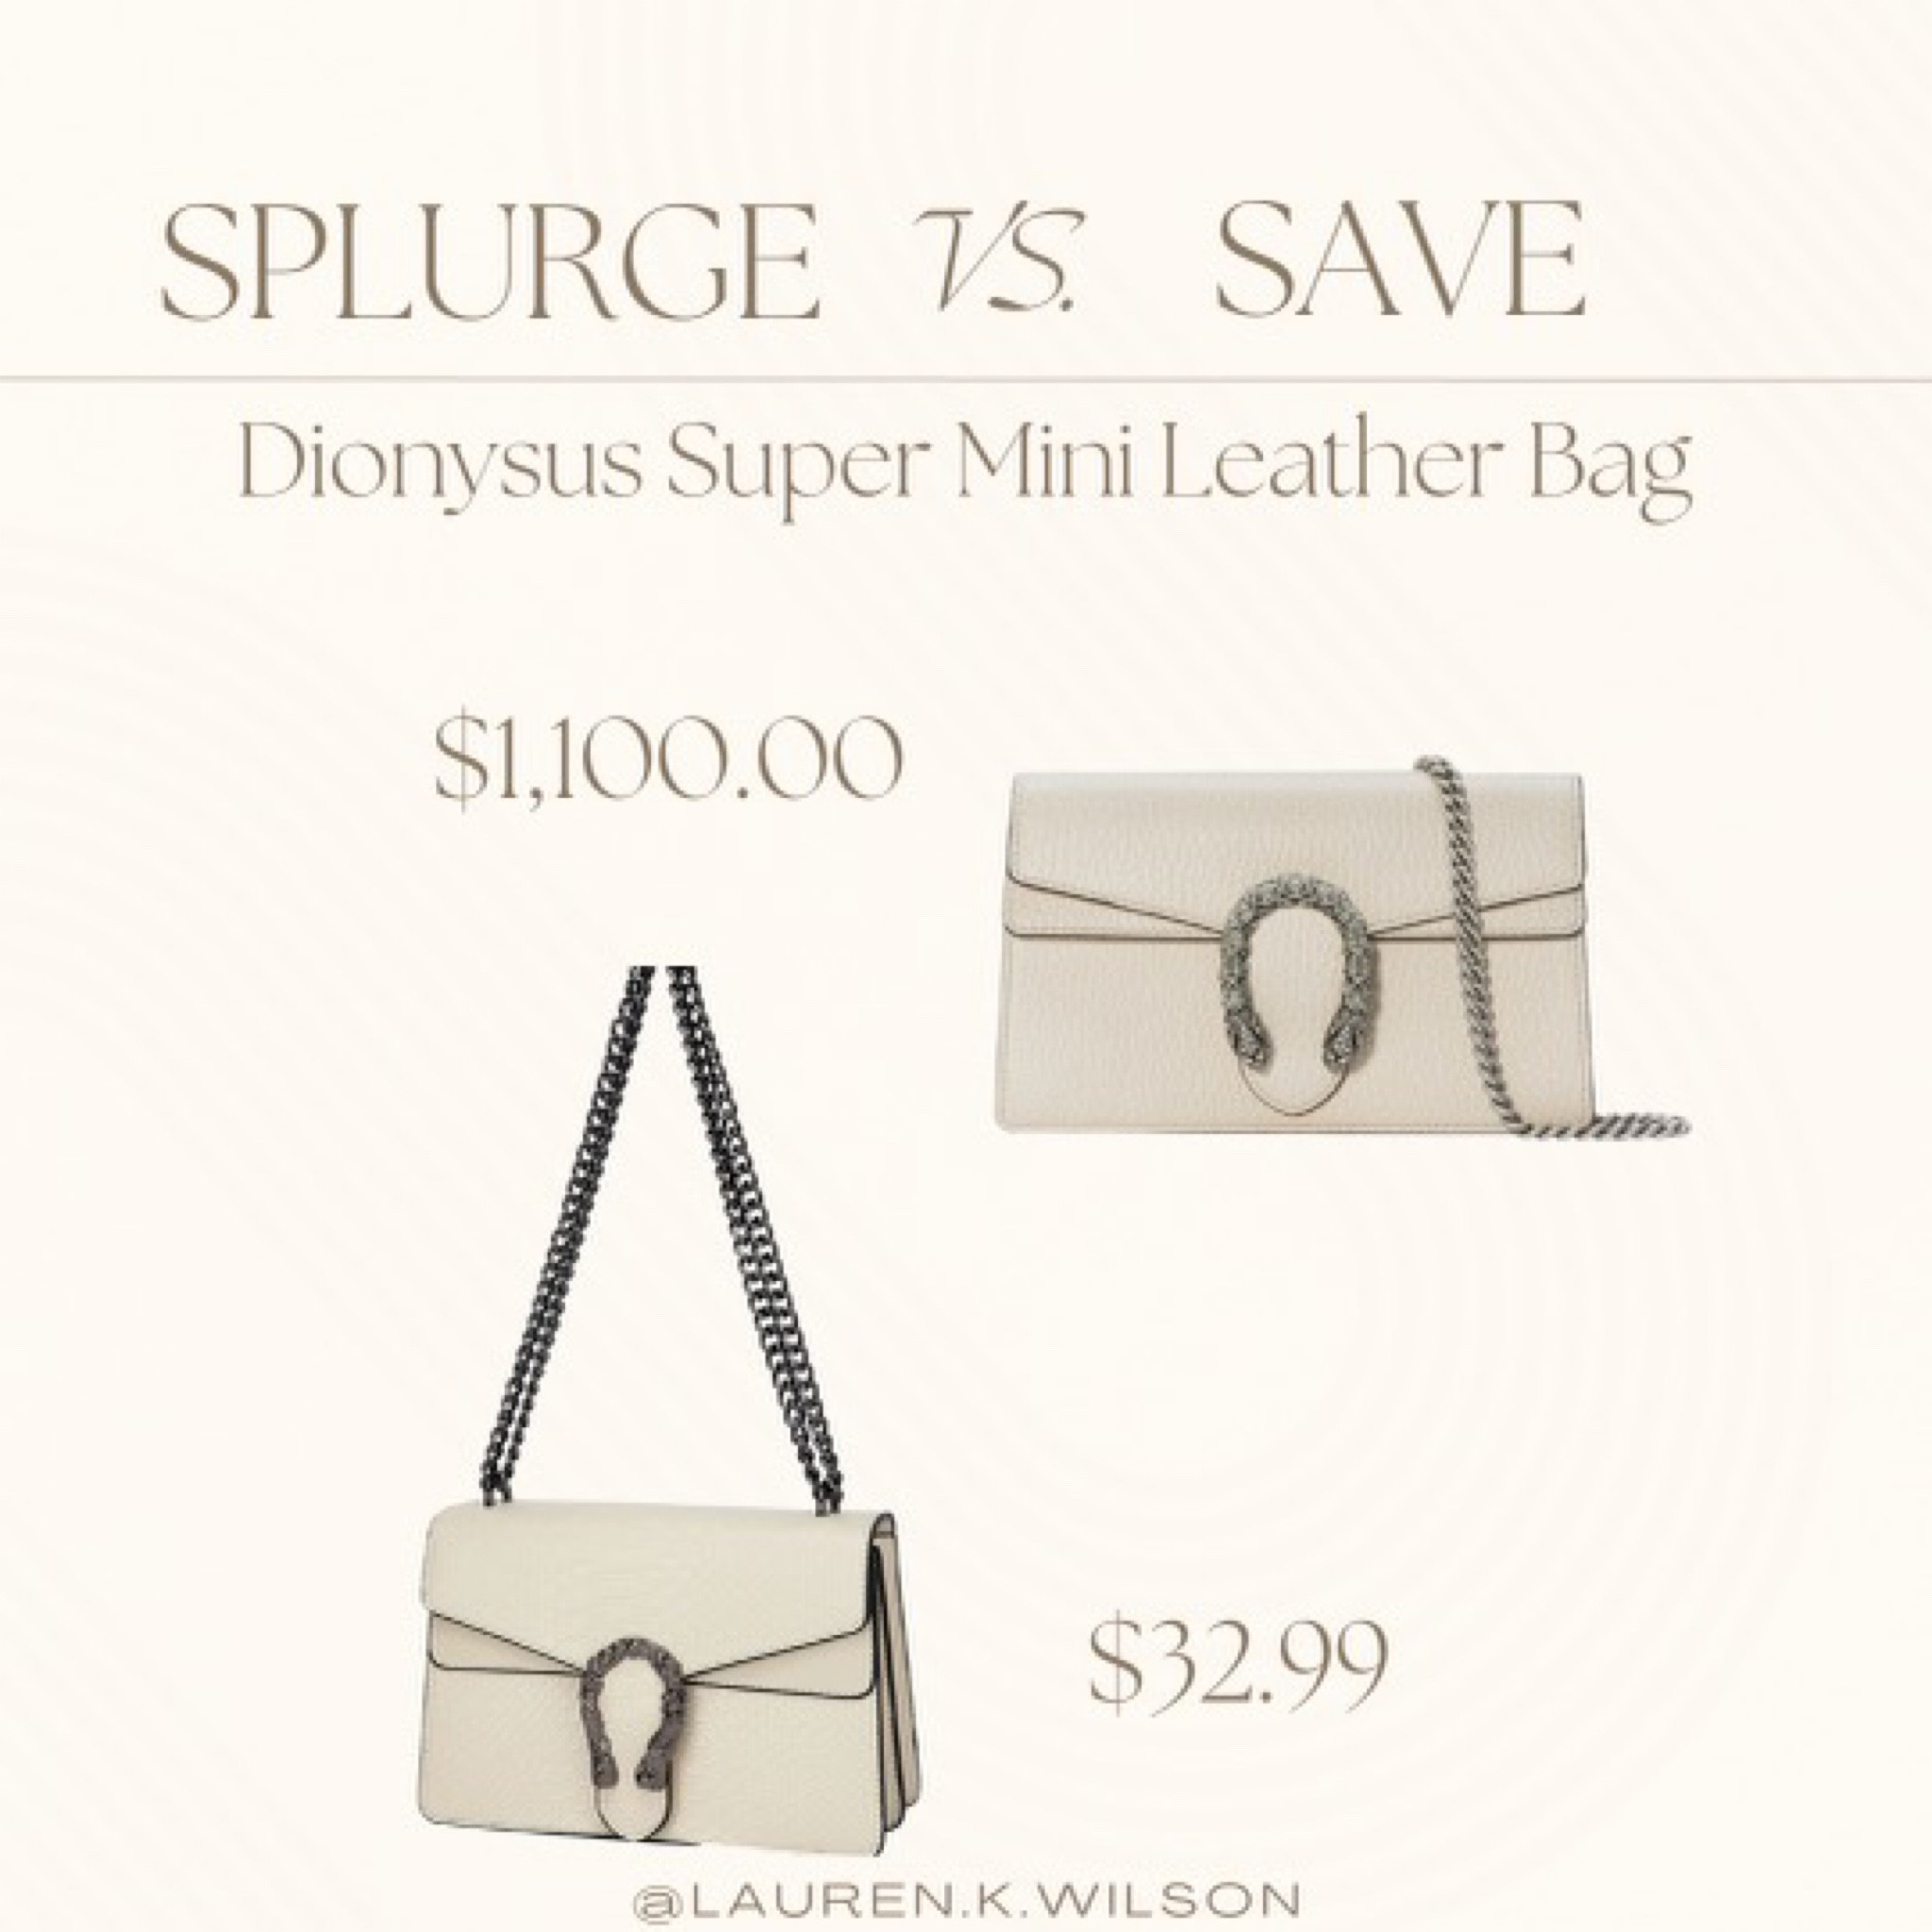 Dionysus super mini leather bag